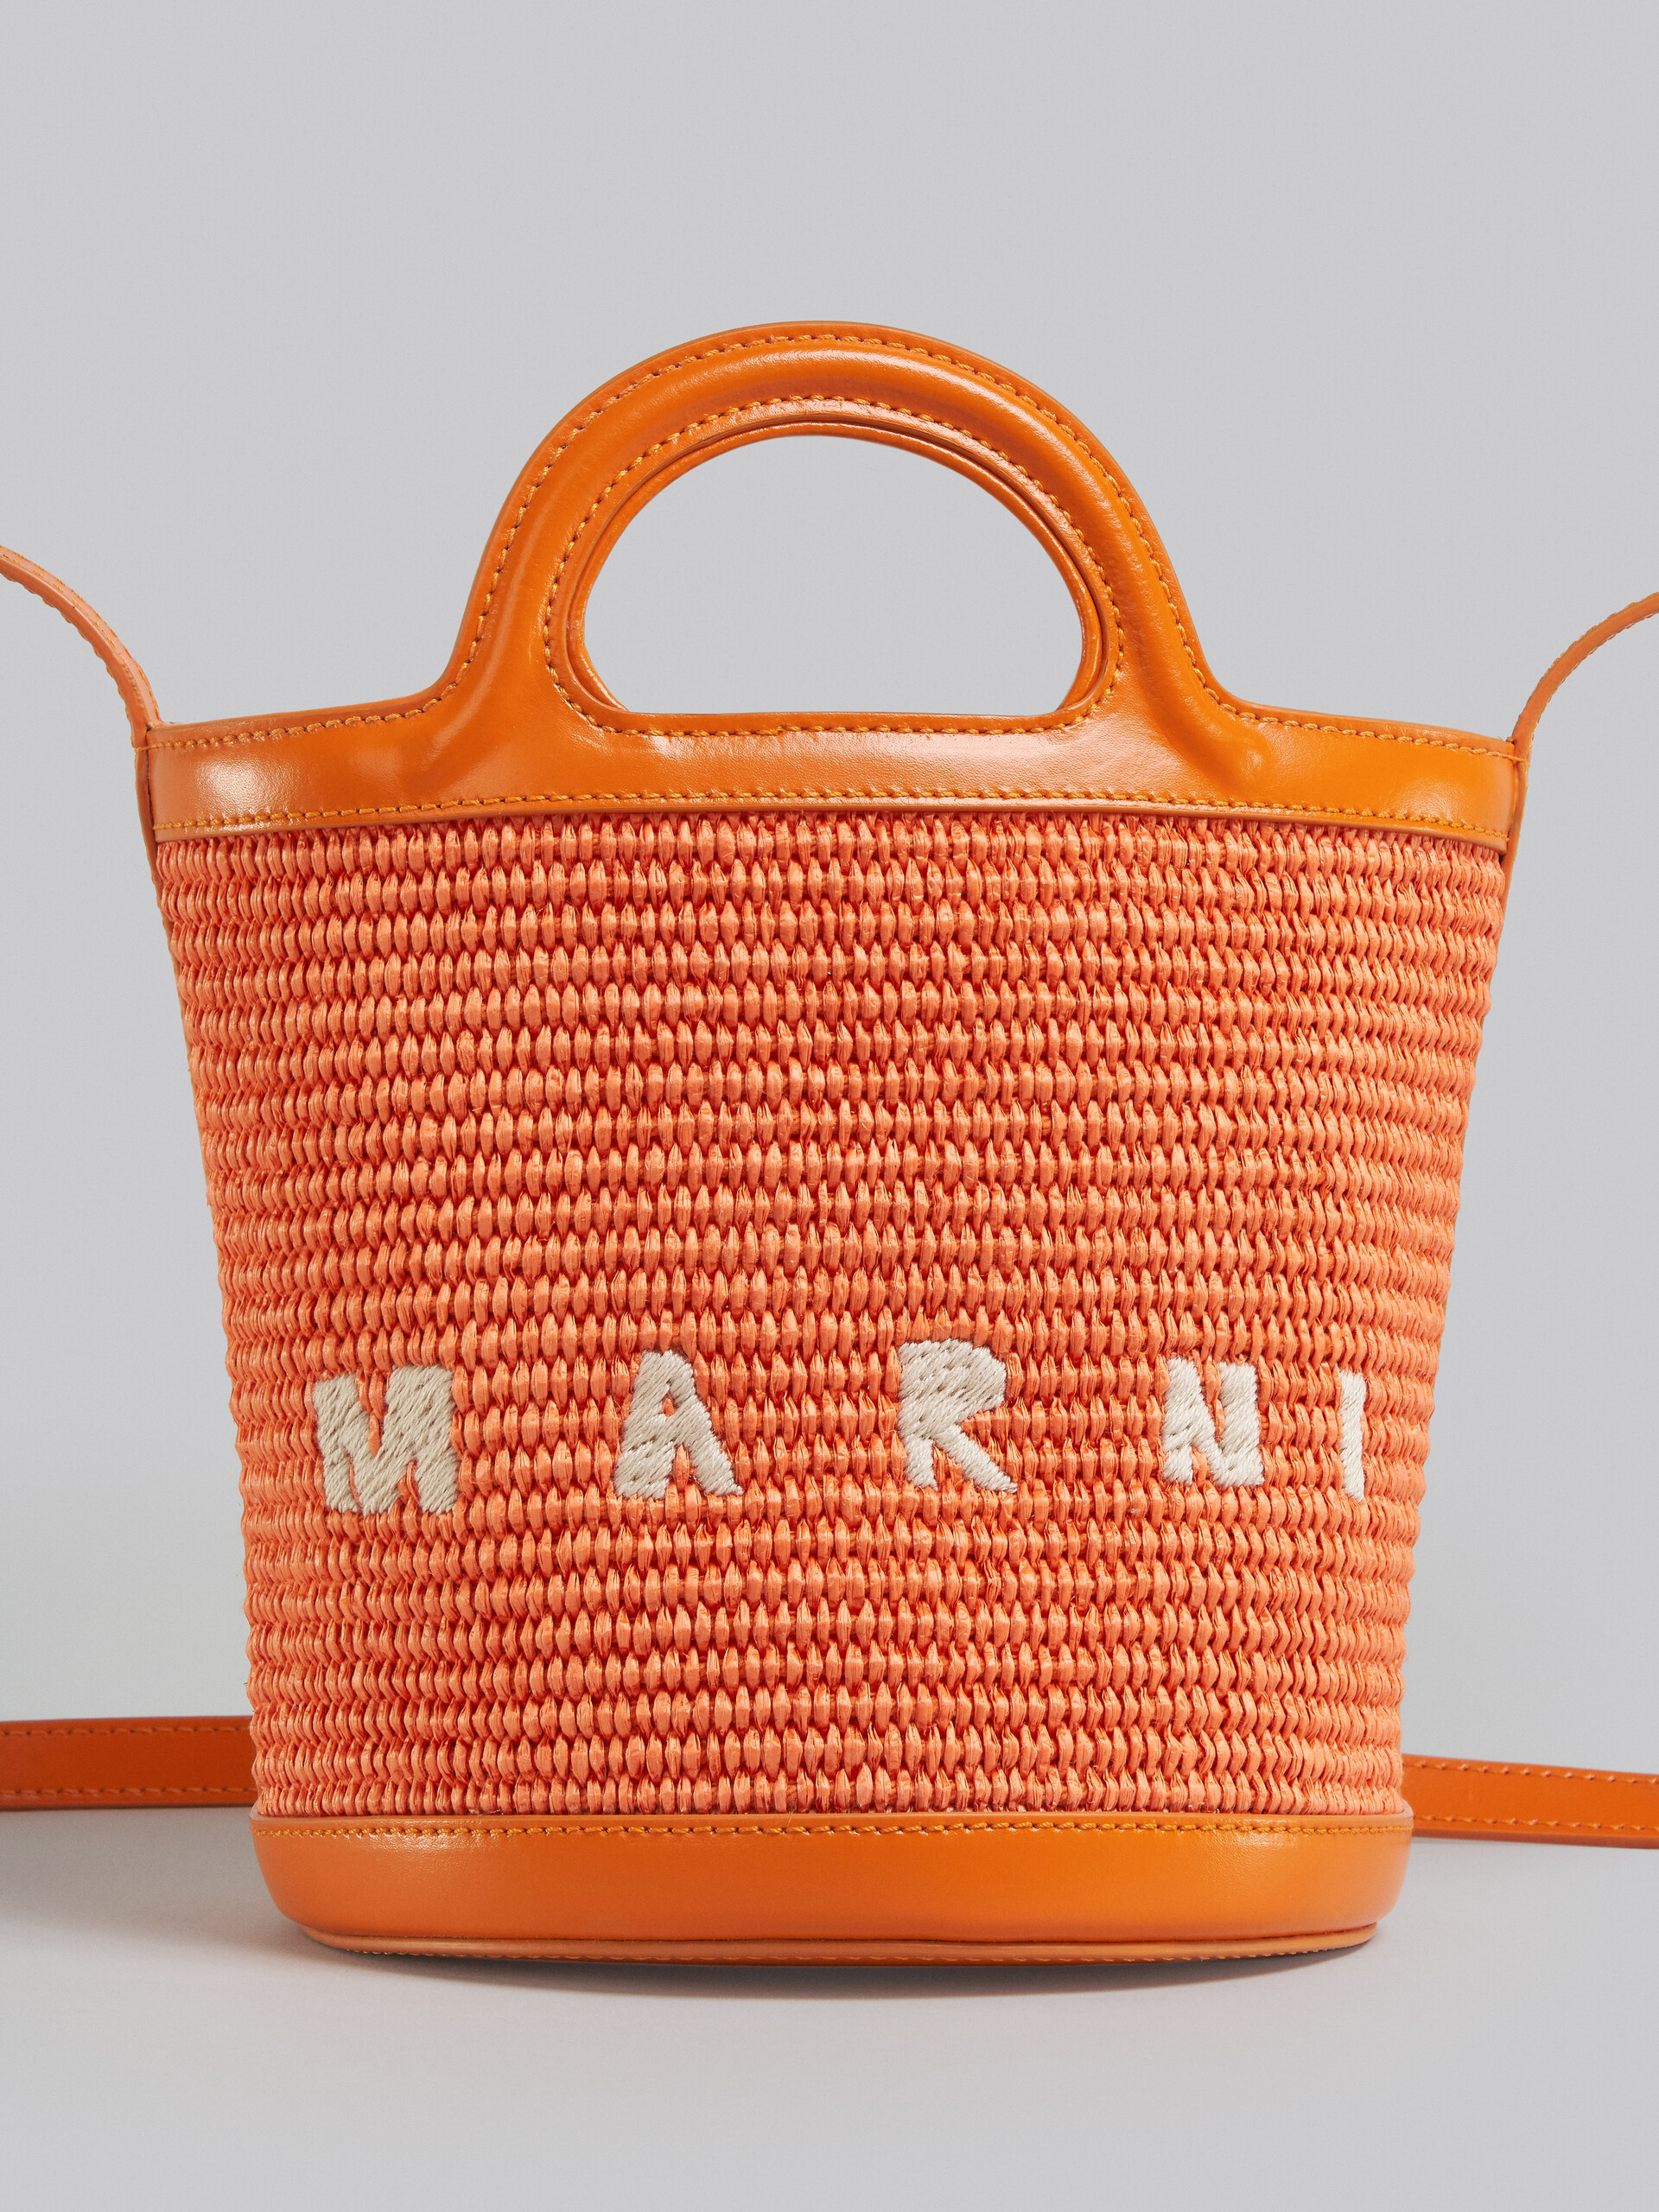 Tropicalia Small Bucket Bag in orange leather and raffia - Shoulder Bag - Image 5